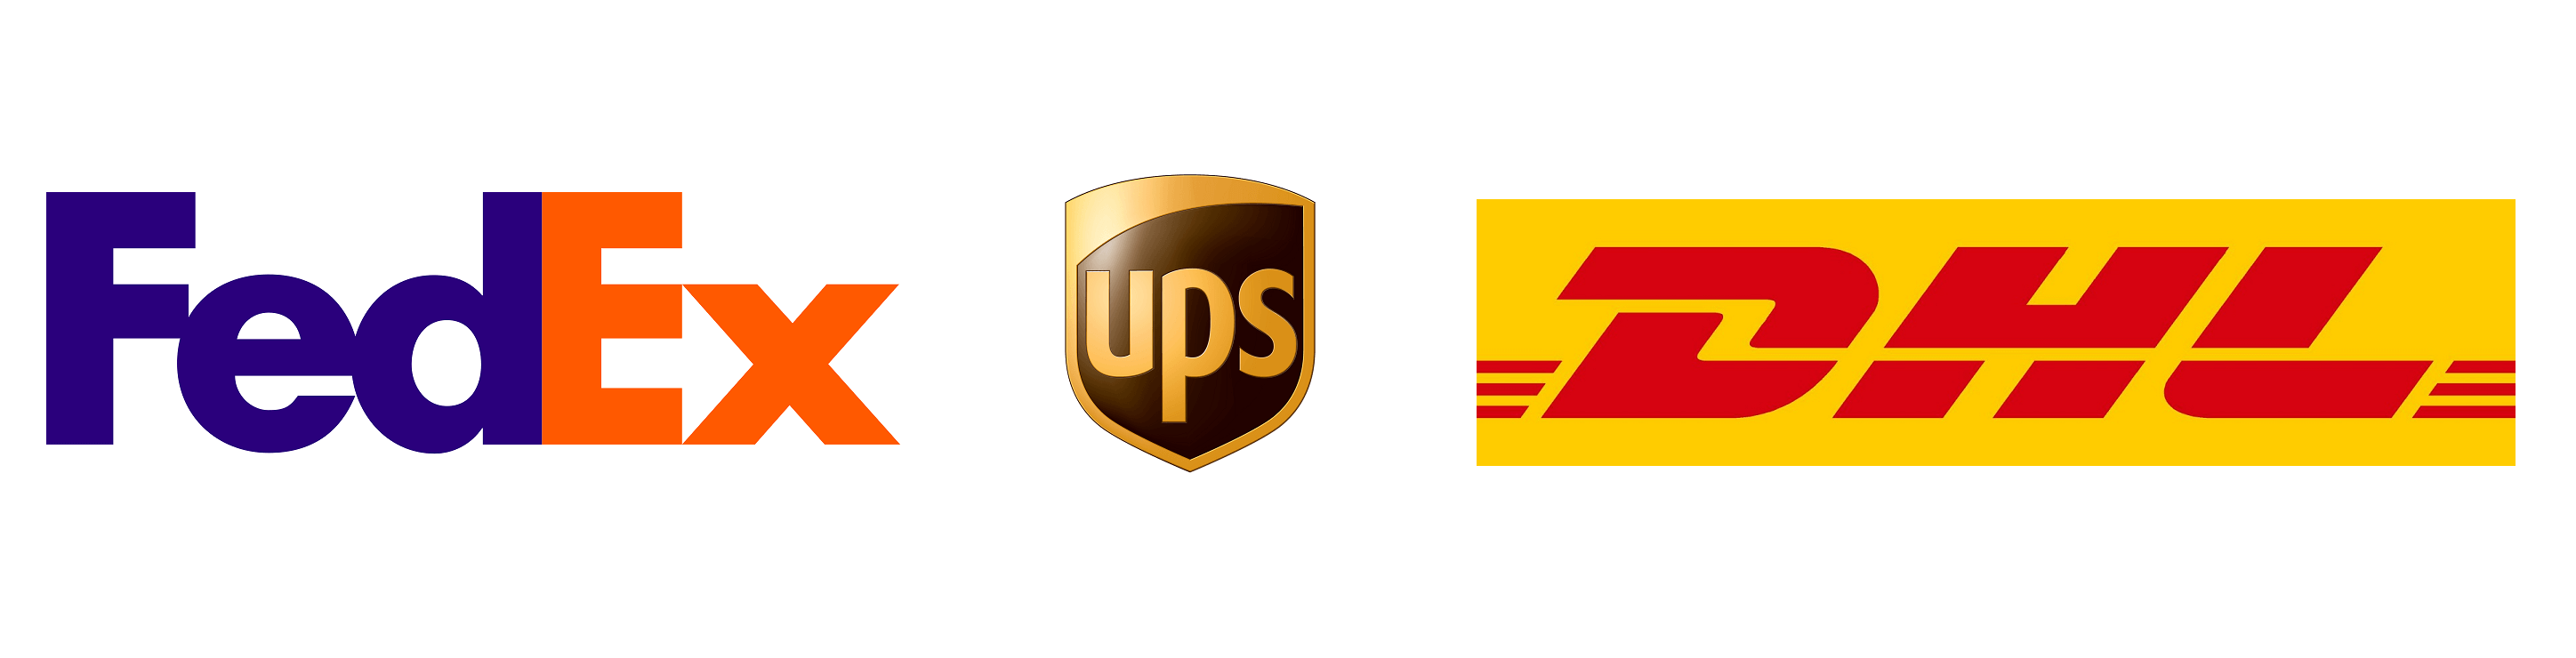 Ups Fedex Logo - Marketing and PR Strategies of Fedex, UPS and DHL - PR News